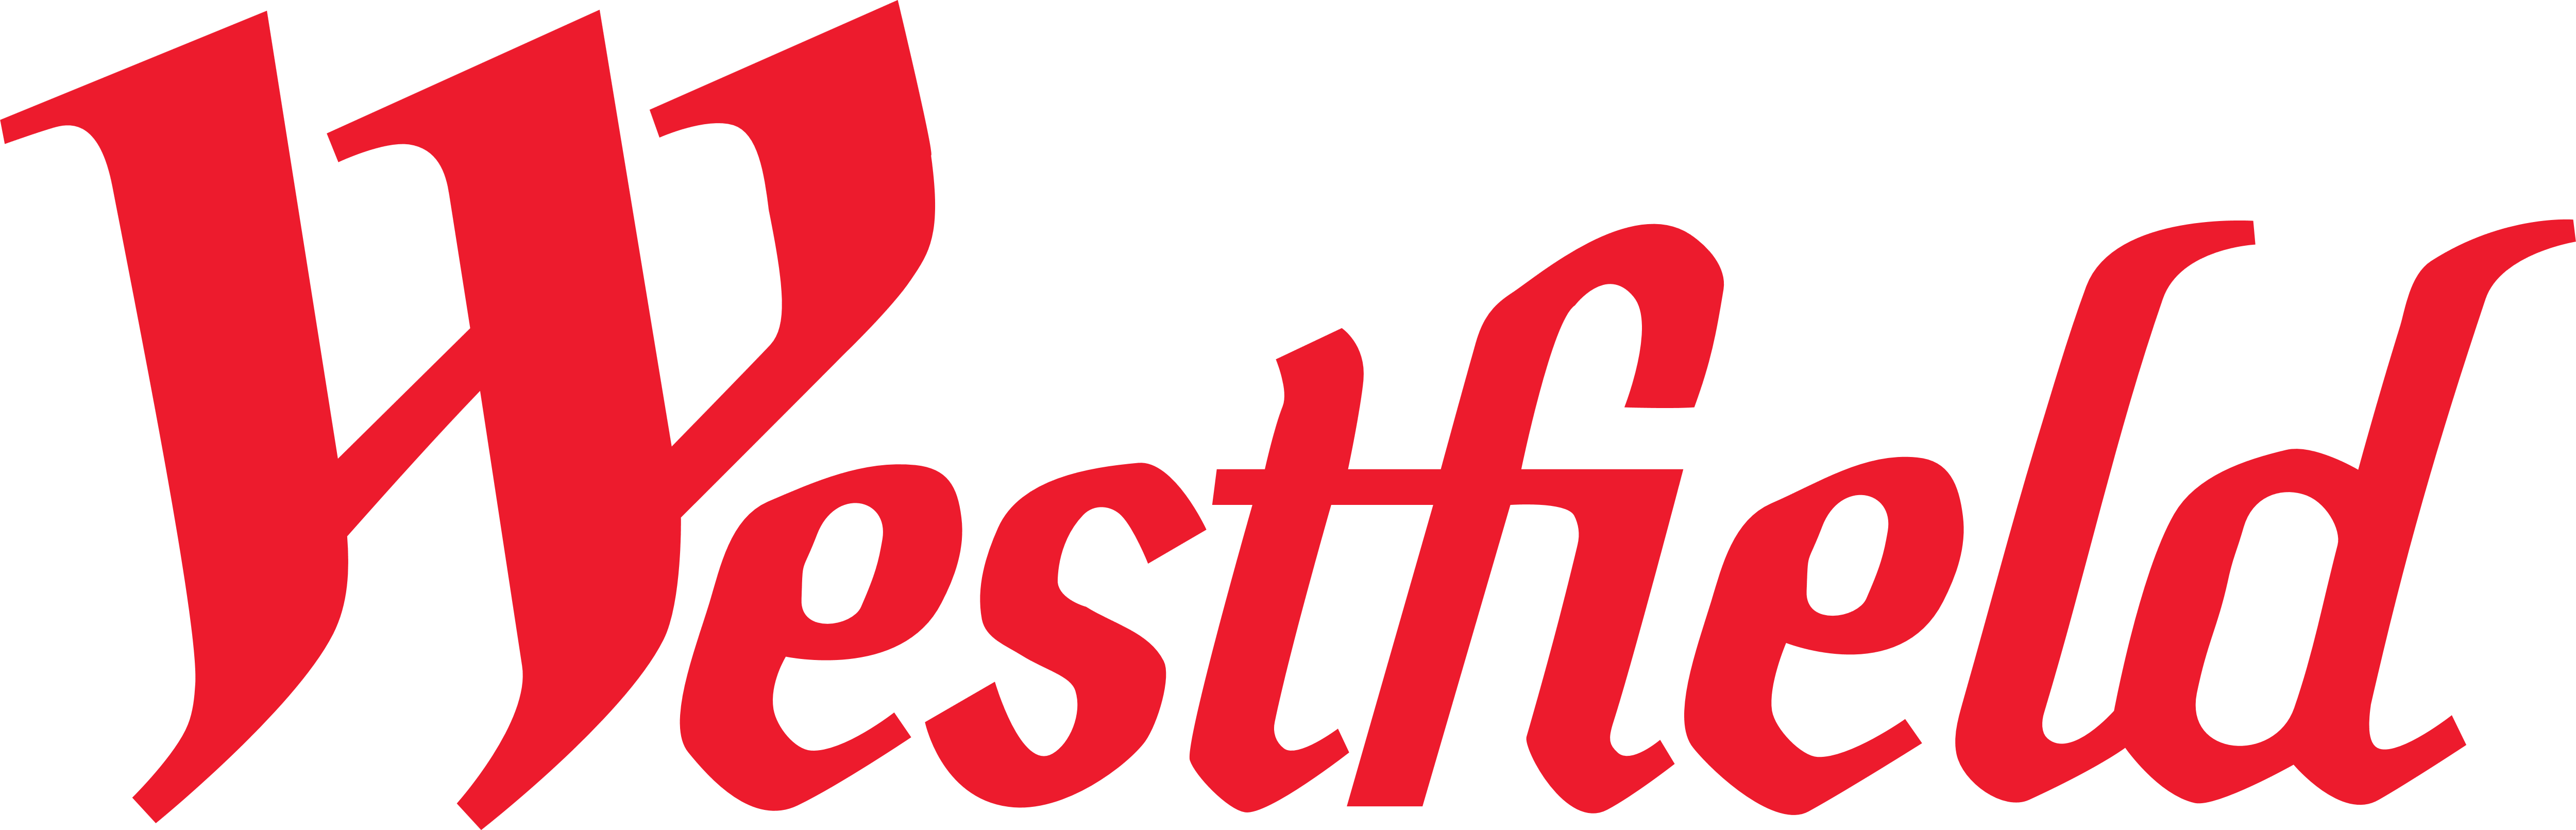 Westfield Logos Download